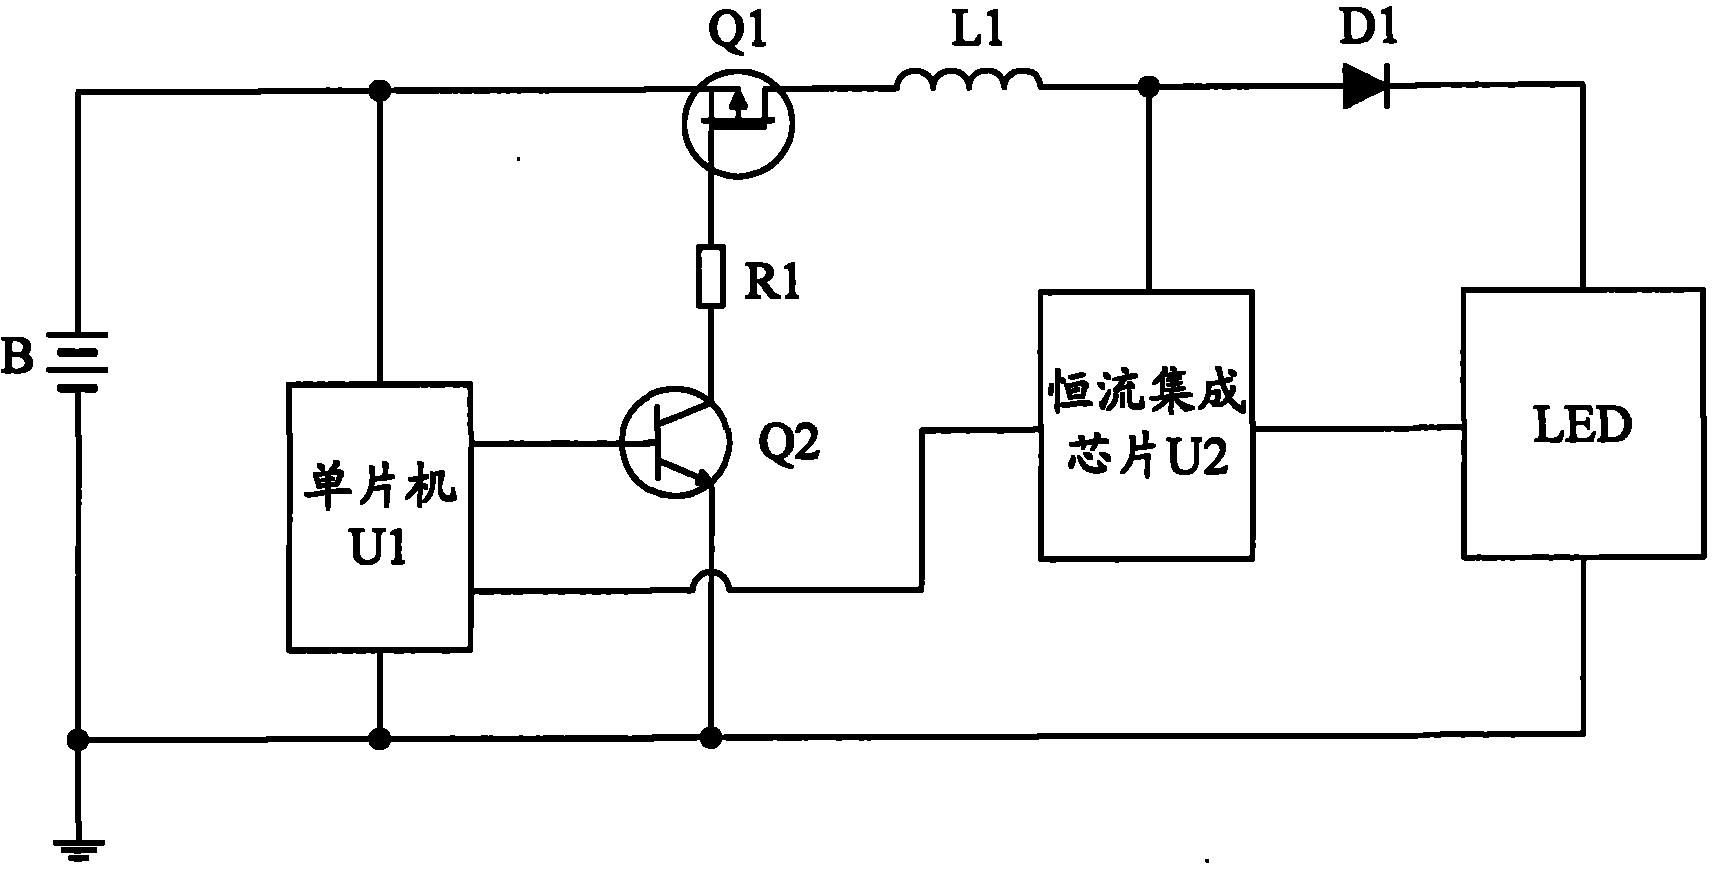 LED drive control circuit